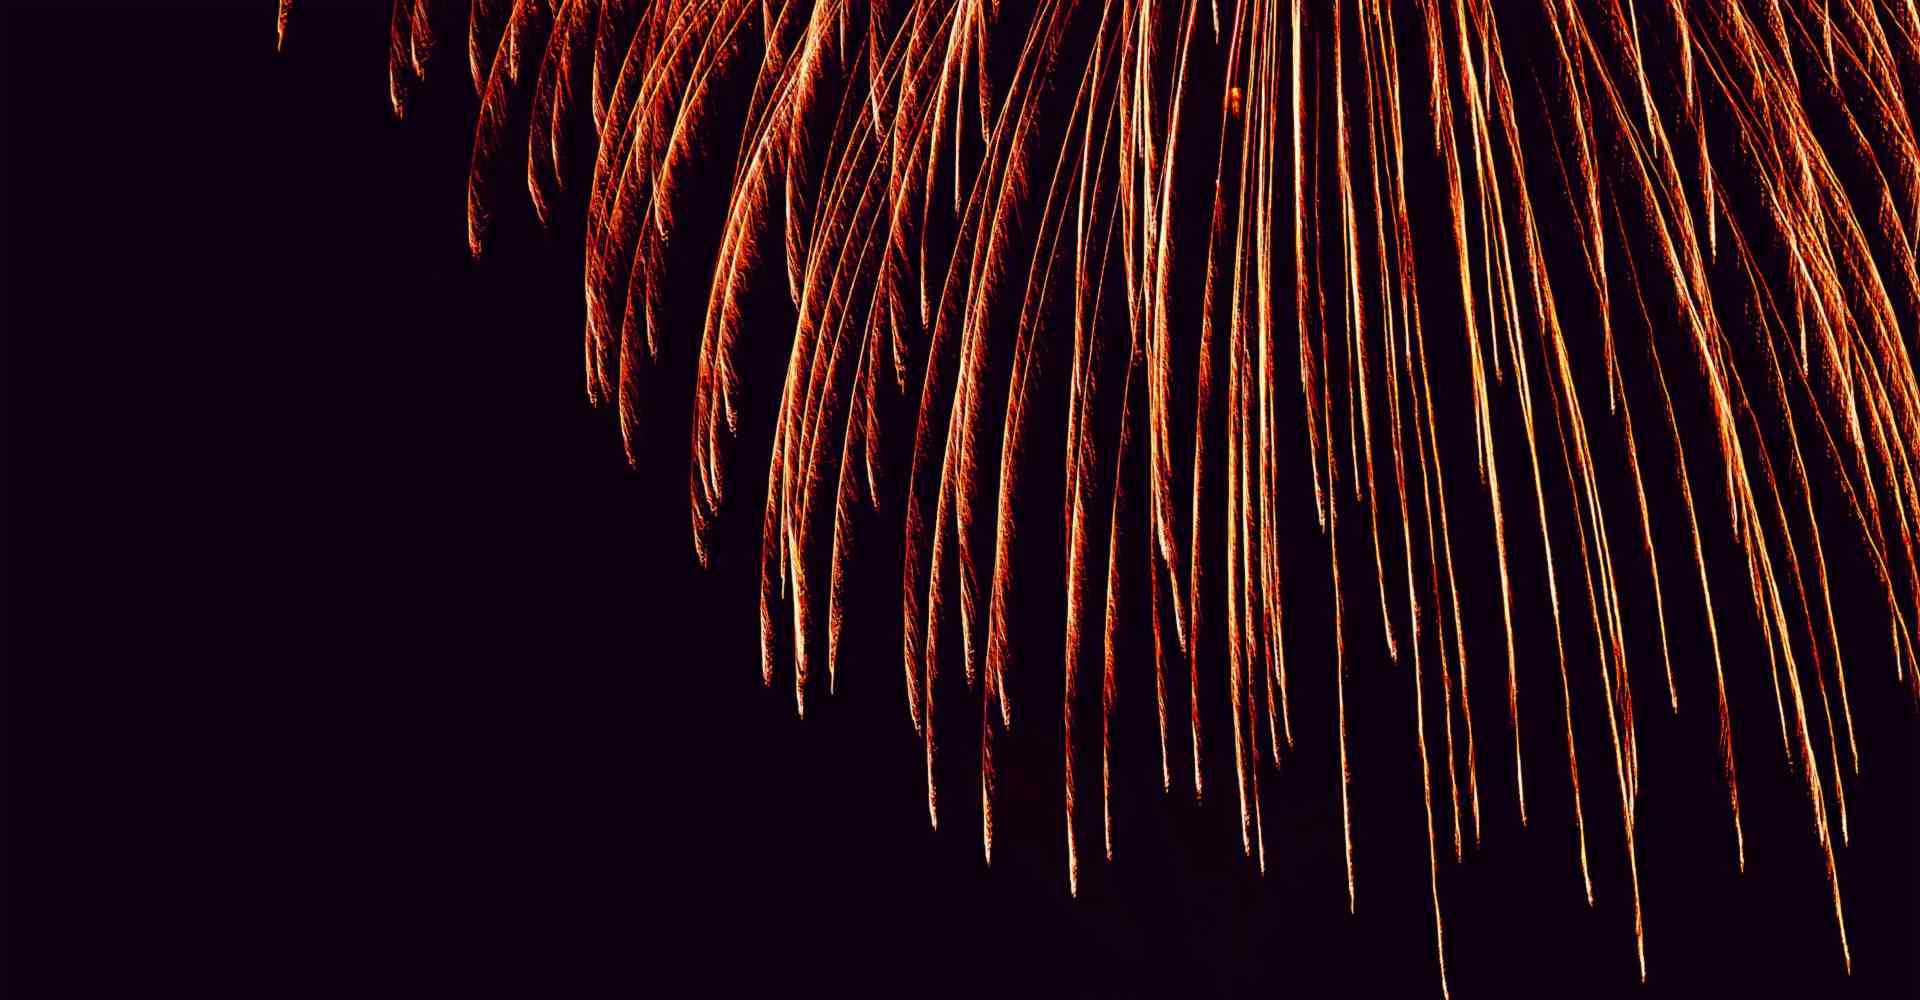 A photo of fireworks by Marc Sendra Martorell on Unsplash